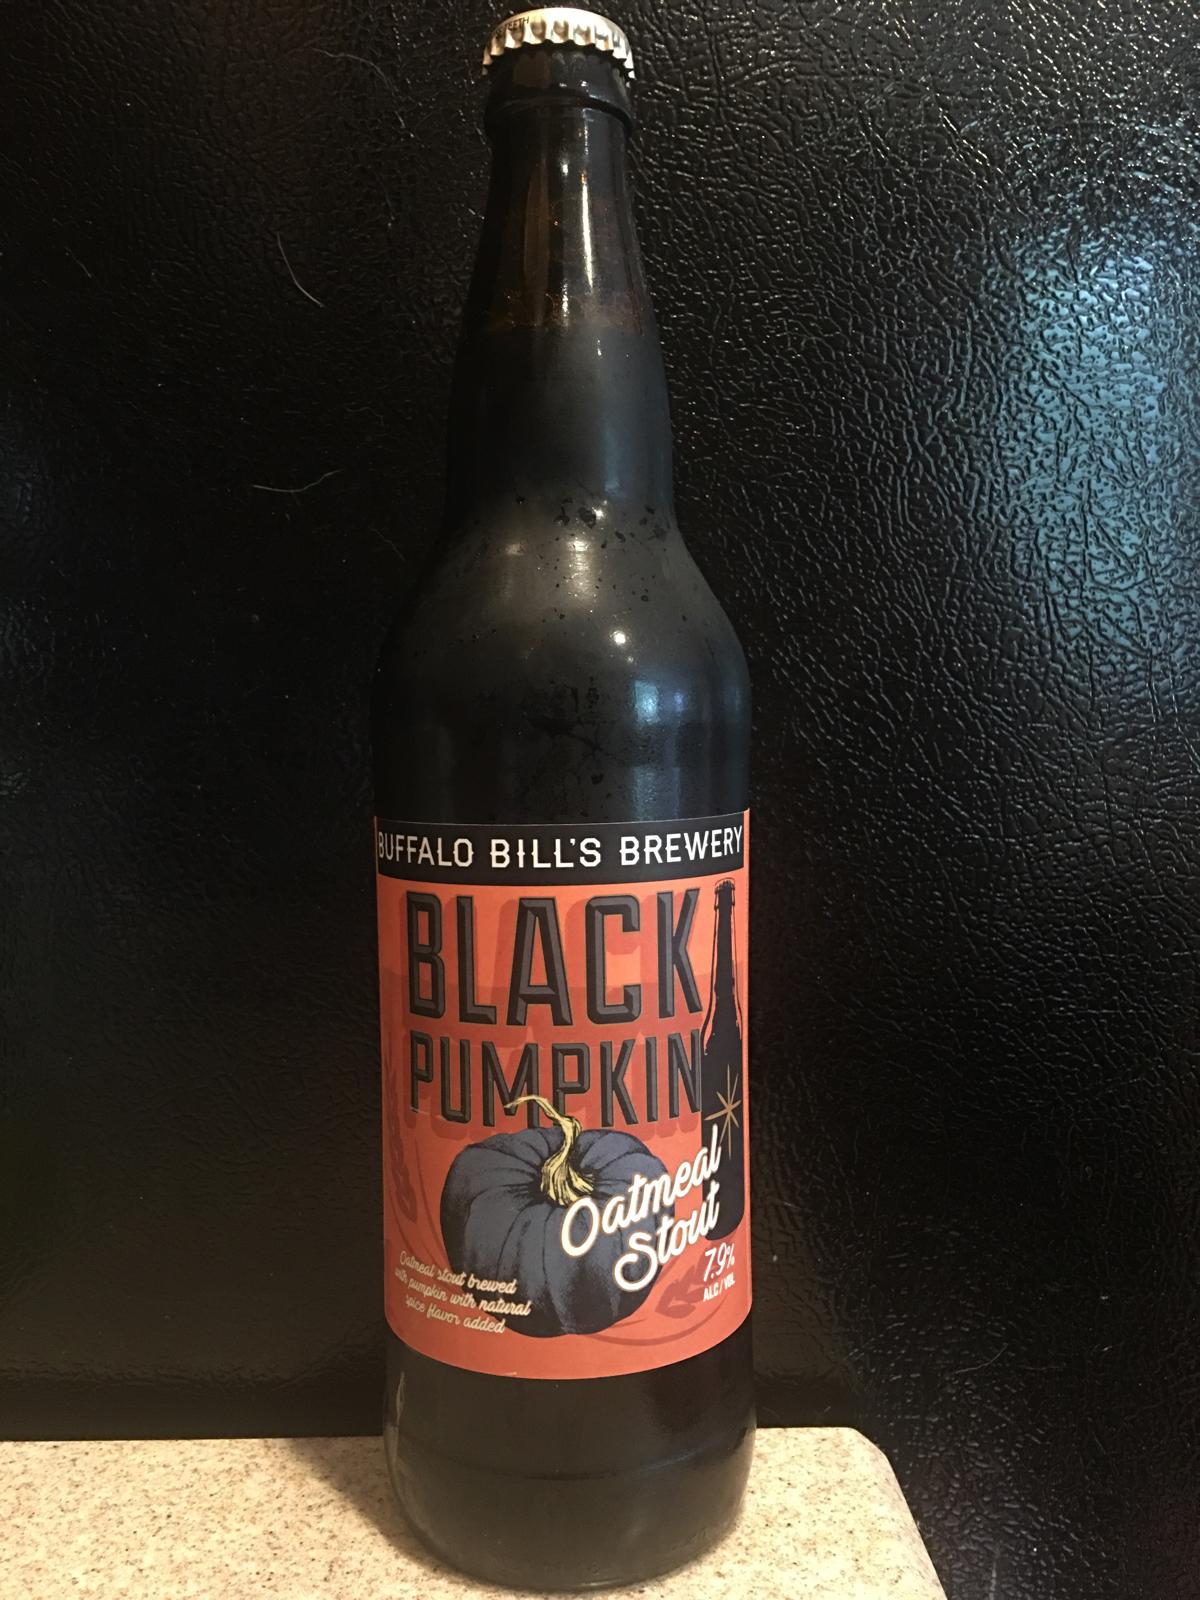 Black Pumpkin Oatmeal Stout (2019)